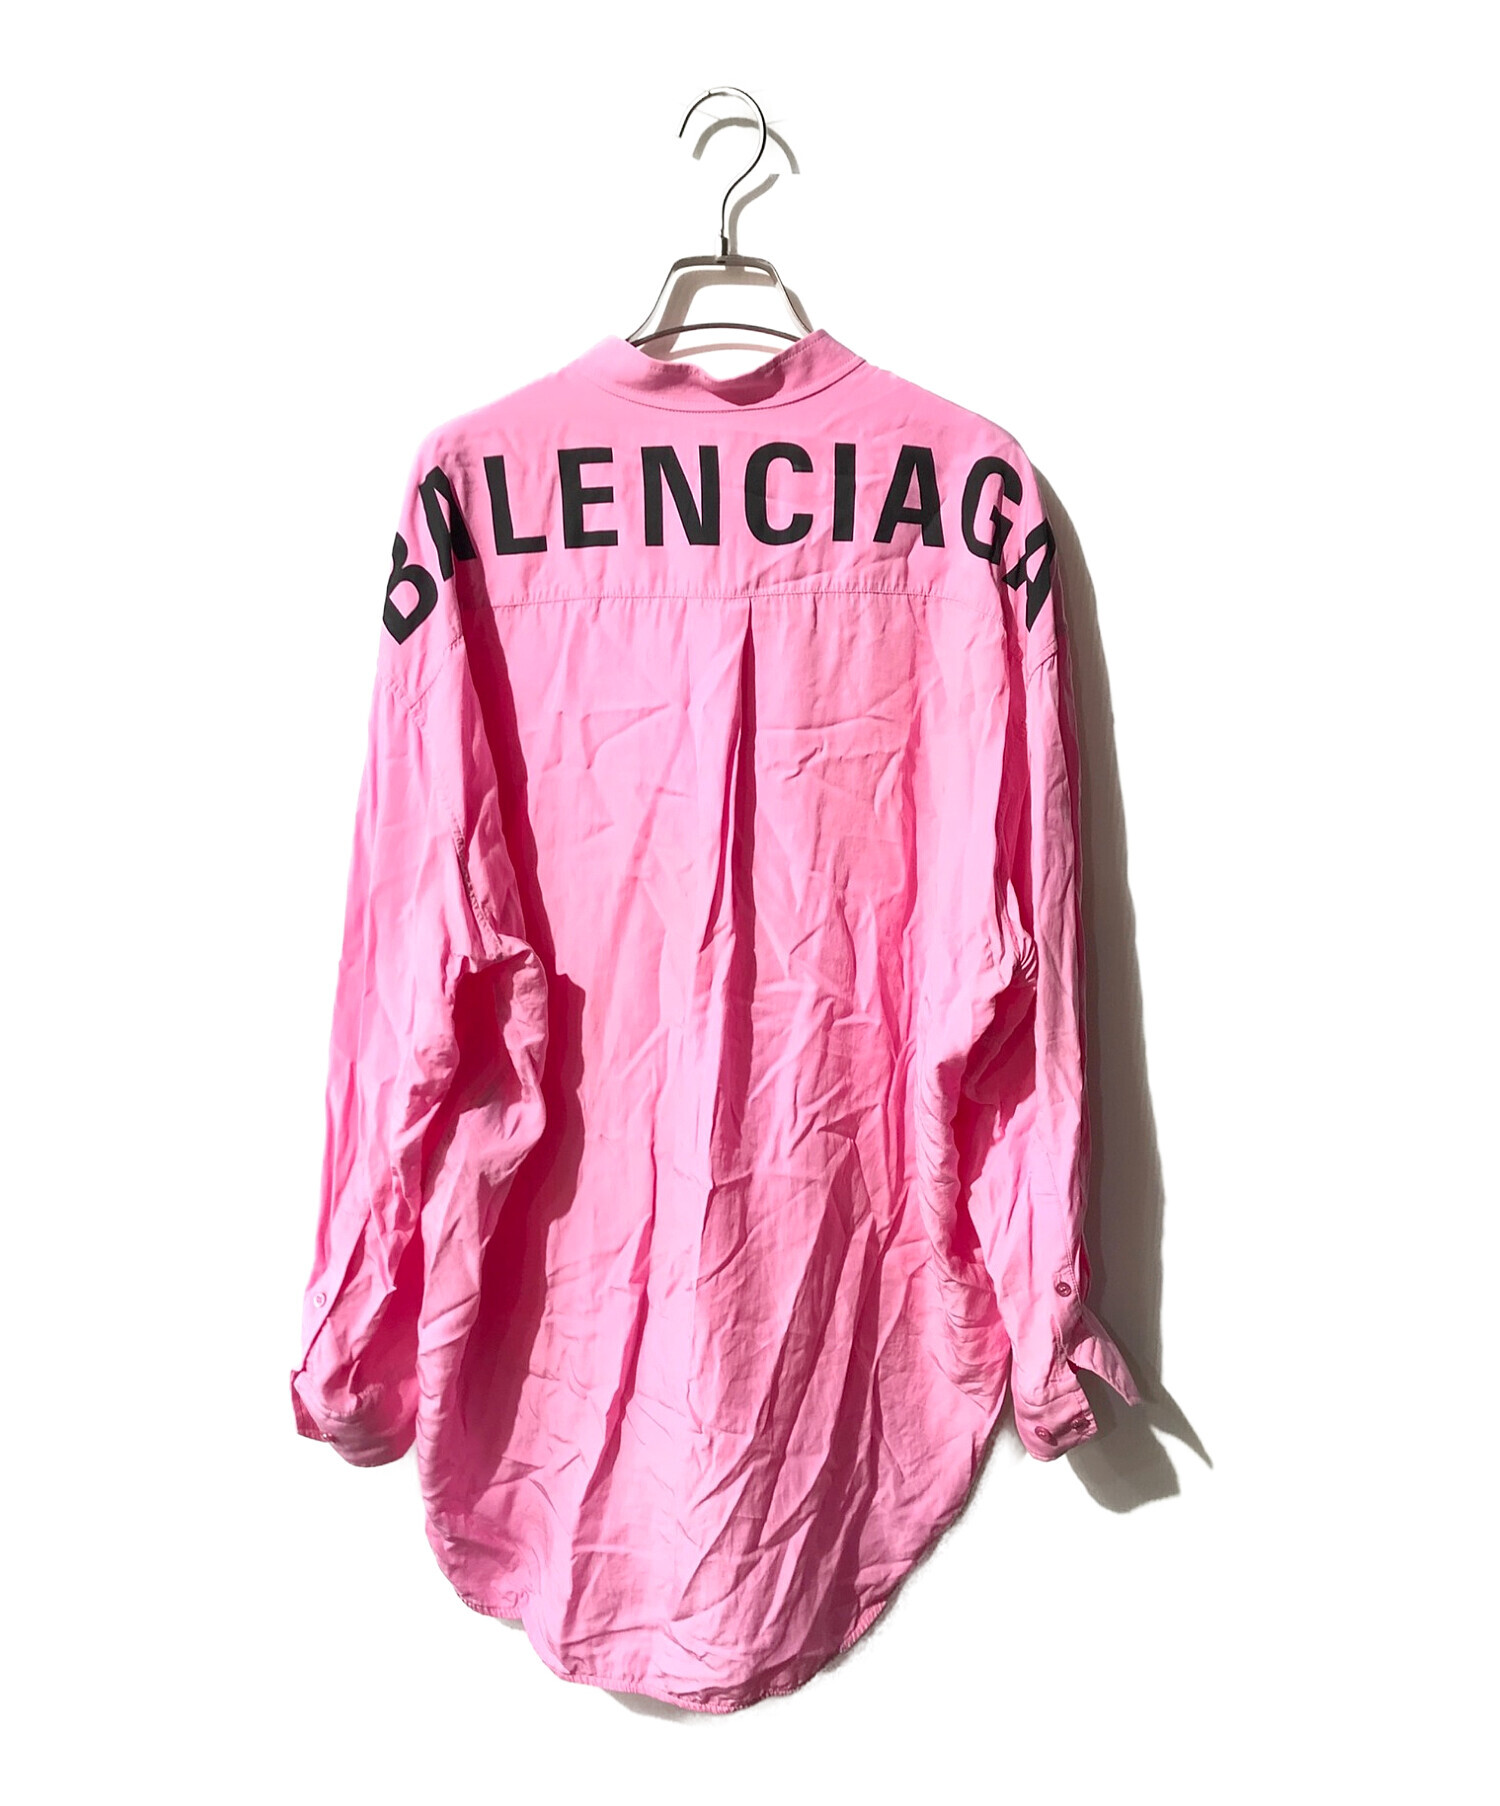 BALENCIAGA (バレンシアガ) バックロゴプリント オーバーサイズ リボンシャツ ピンク サイズ:S